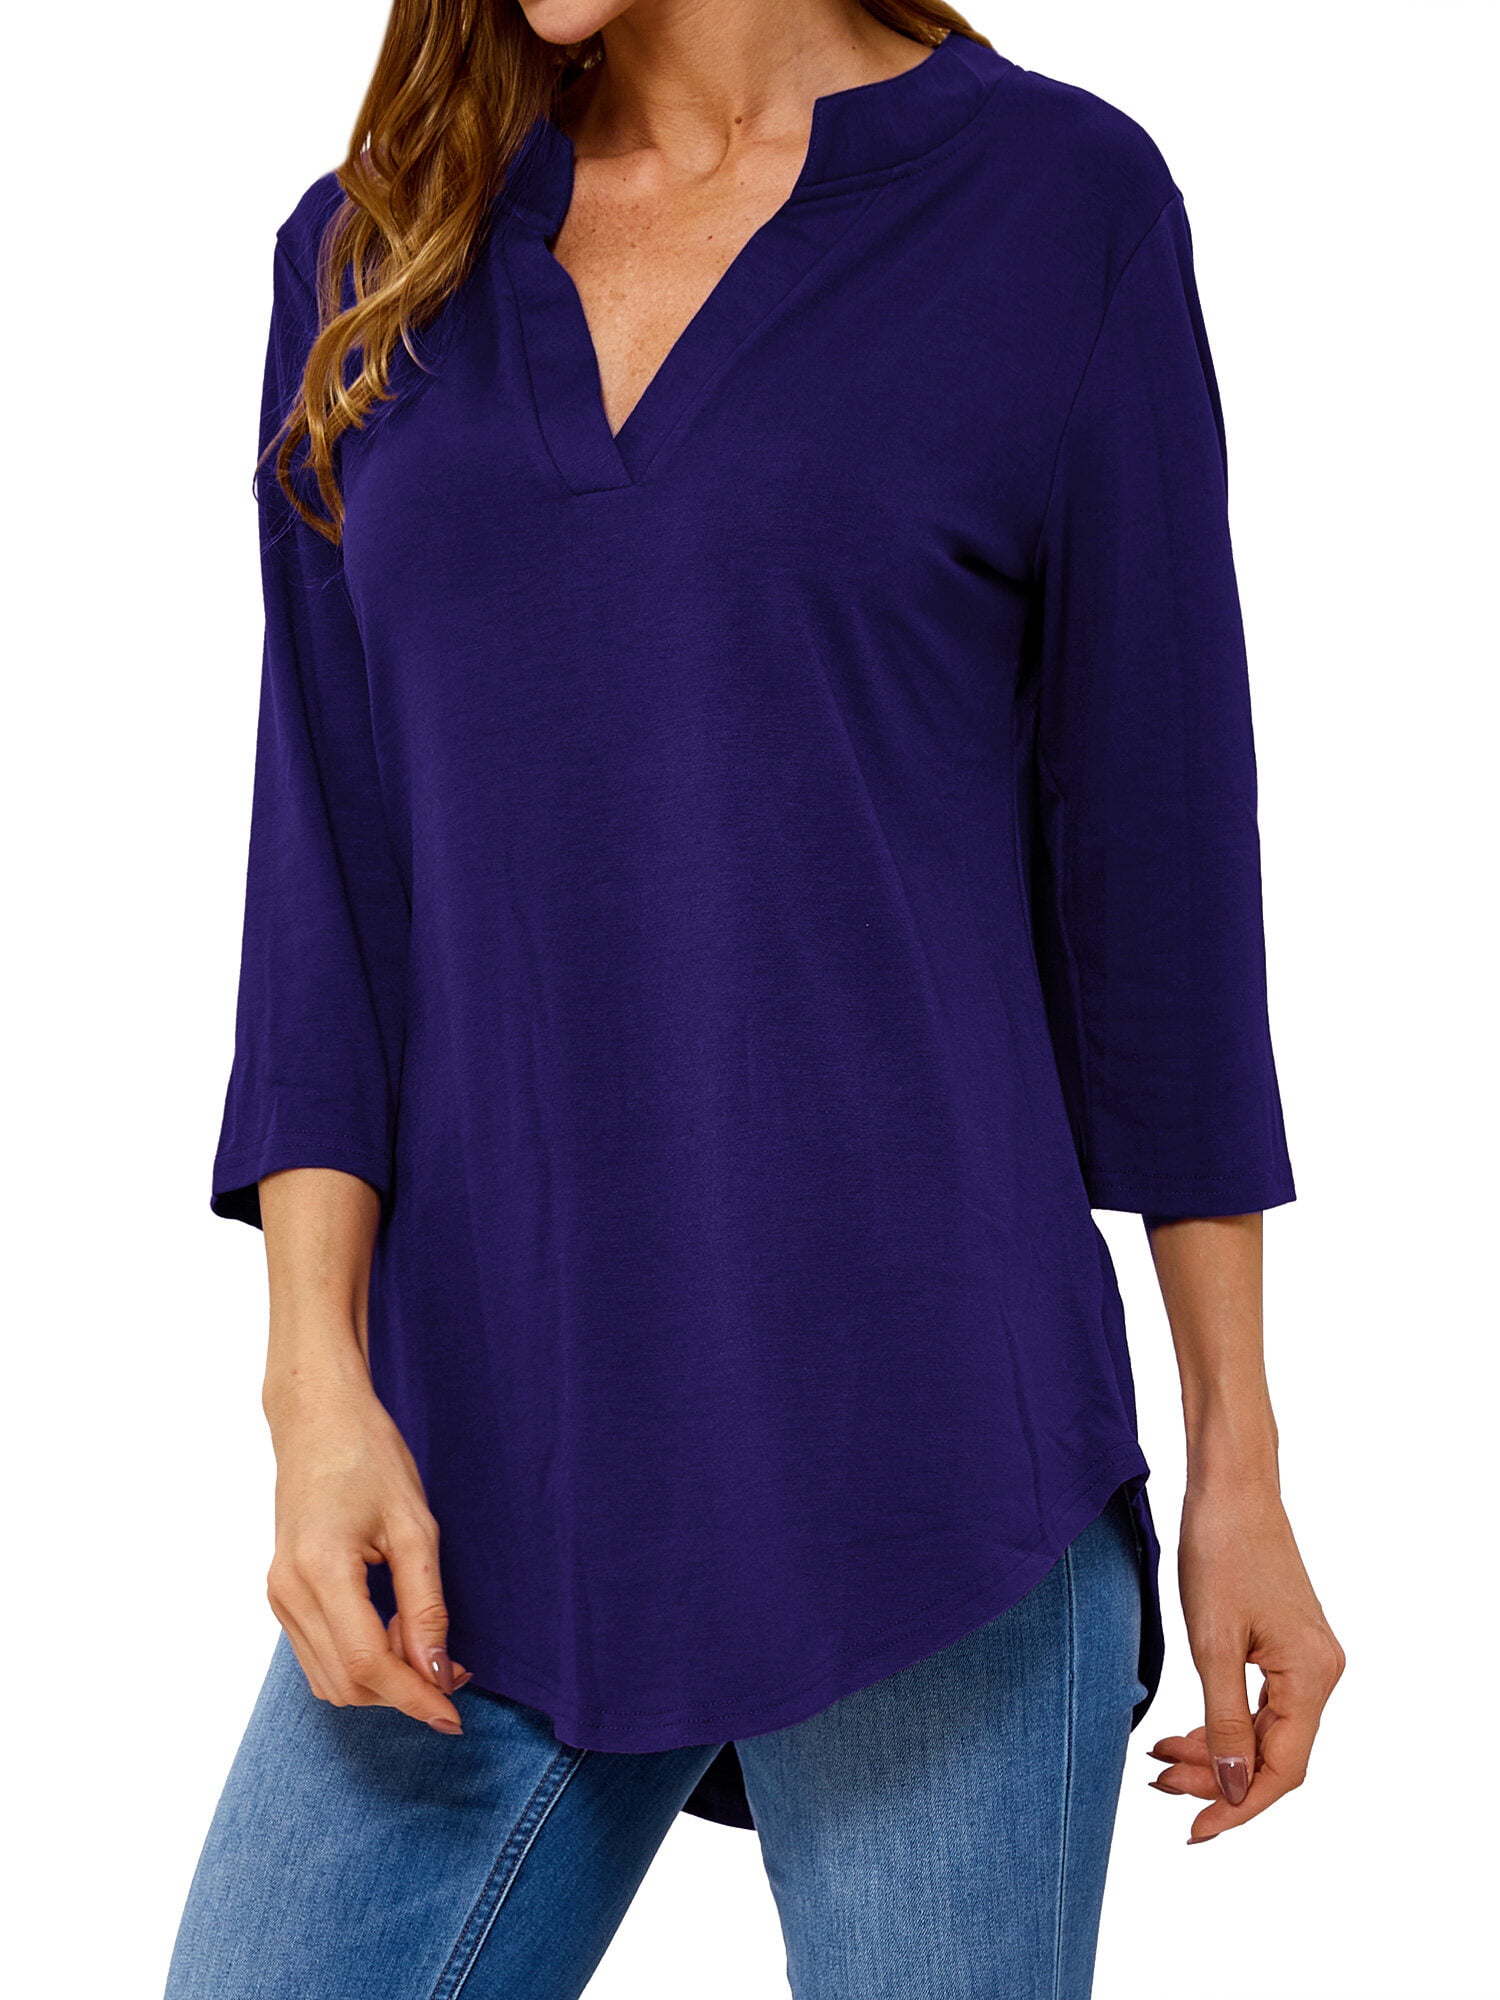 Lucky Brand Top Shirt Womens 3X Blue Purple Floral V Neck 3/4